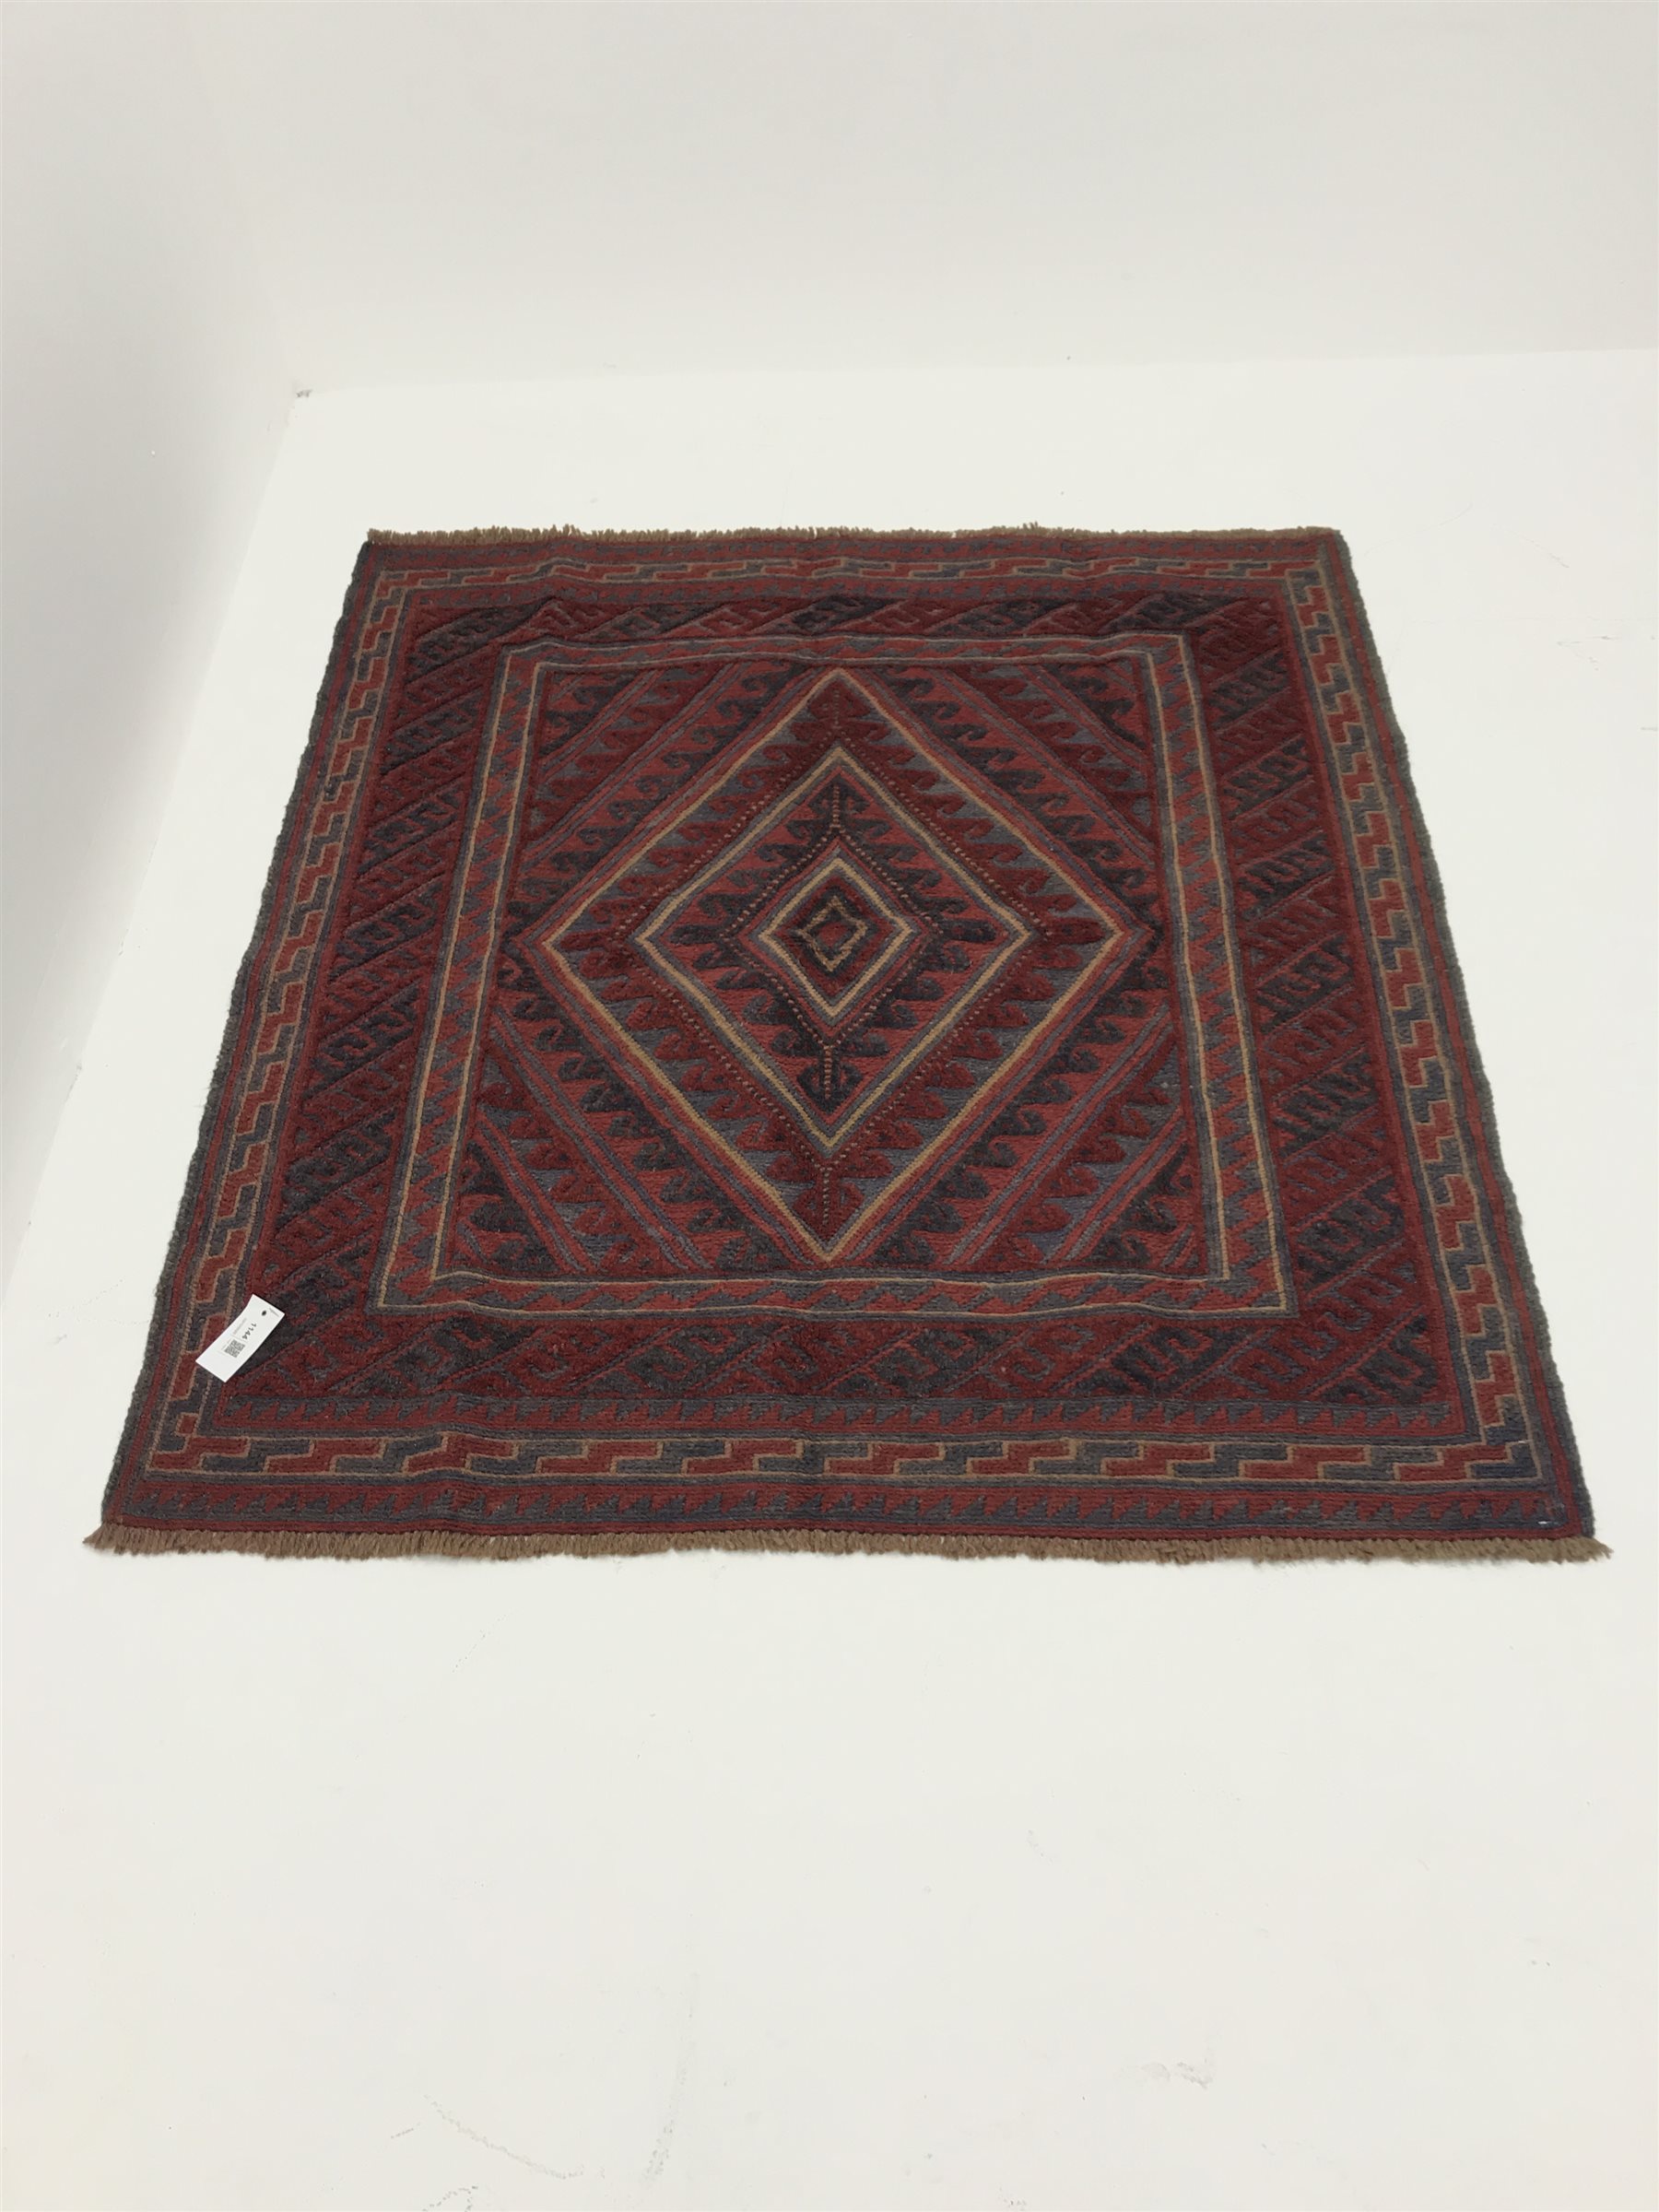 Gazak red and blue ground rug, central medallion, 120cm x 114cm - Image 2 of 6